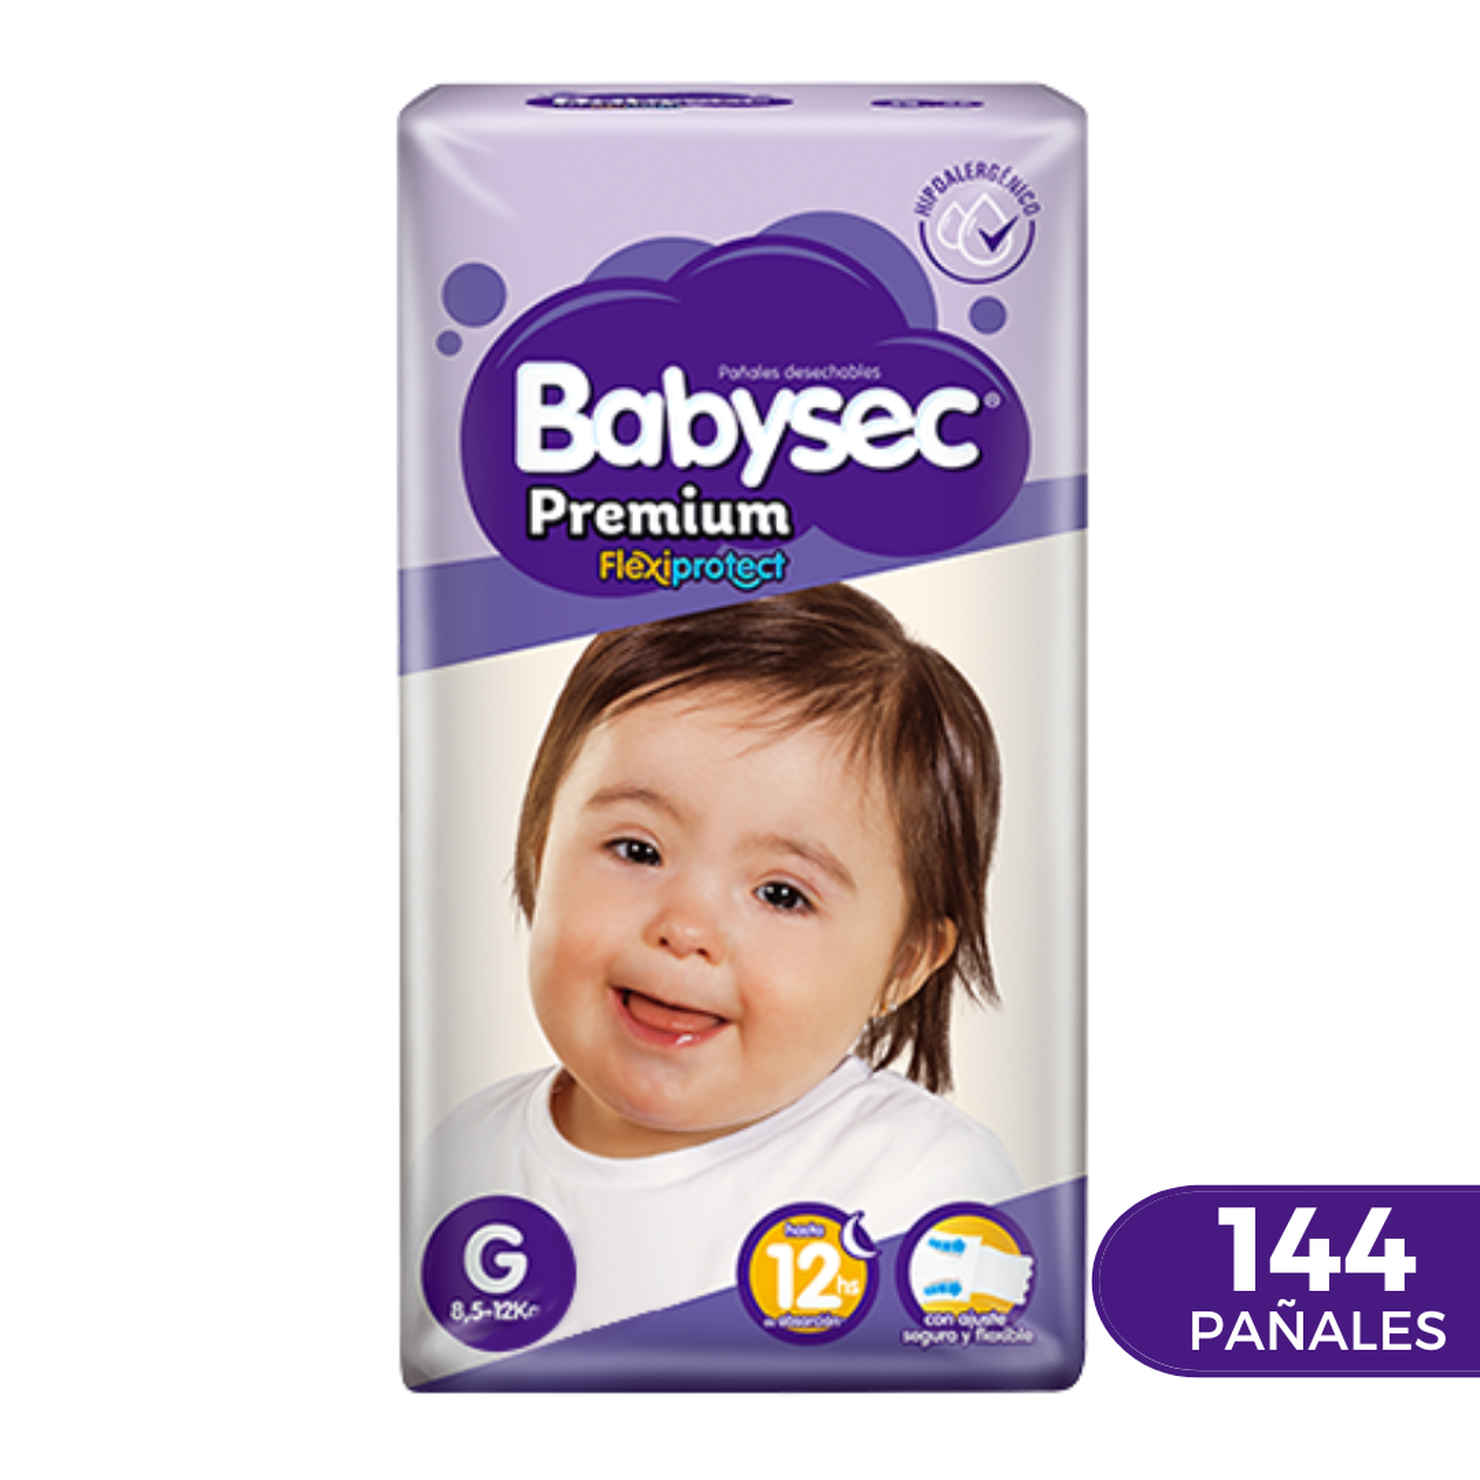 Pañal Babysec Premium G-144 pañales | Paris.cl